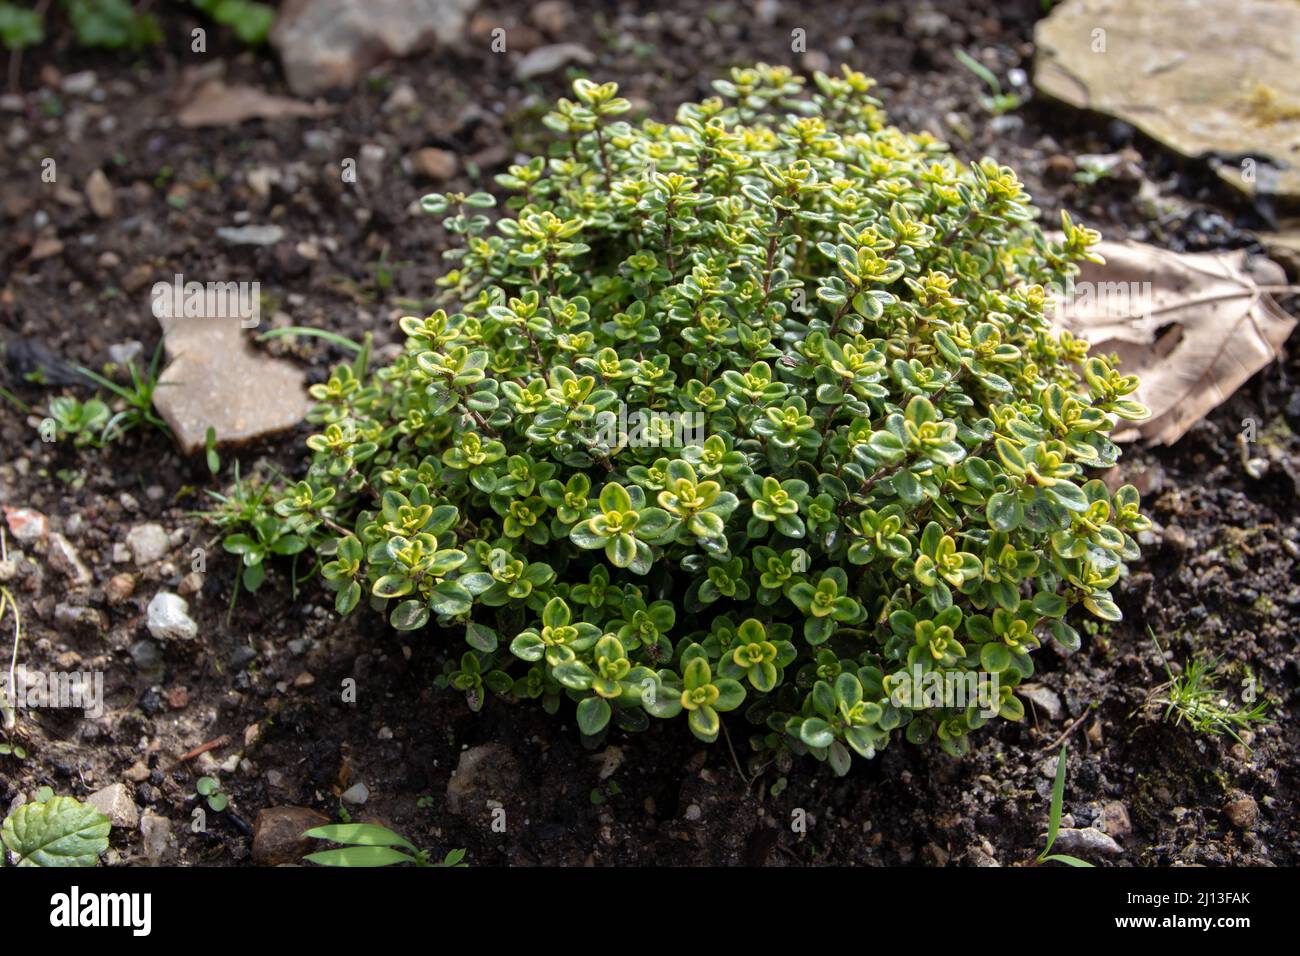 Thymus citriodorus culinary herb plant. Lemon or citrus thyme decorative bush. Stock Photo